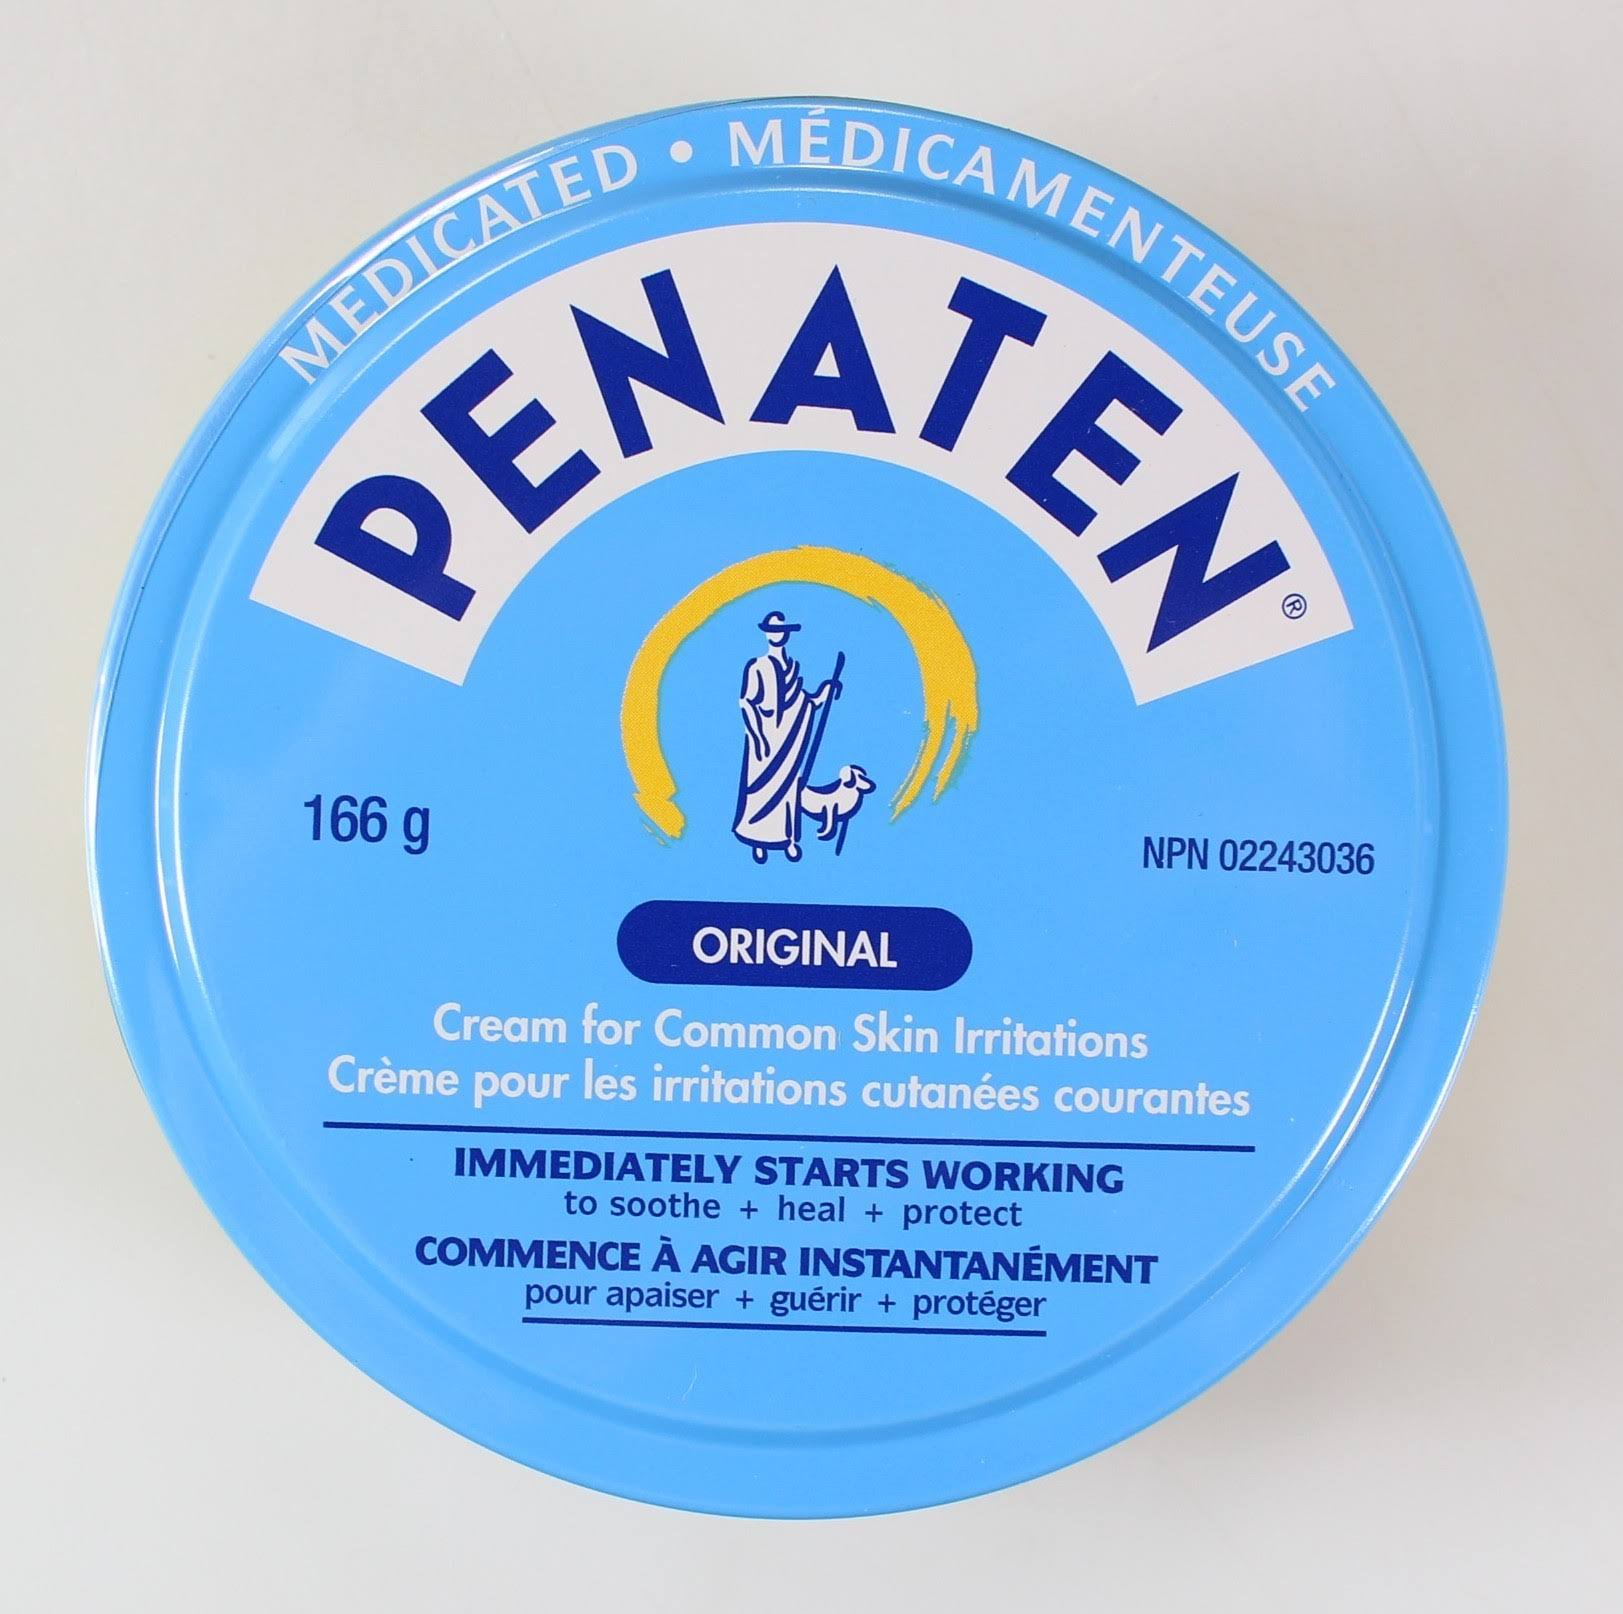 Penaten Medicated Cream from Penaten